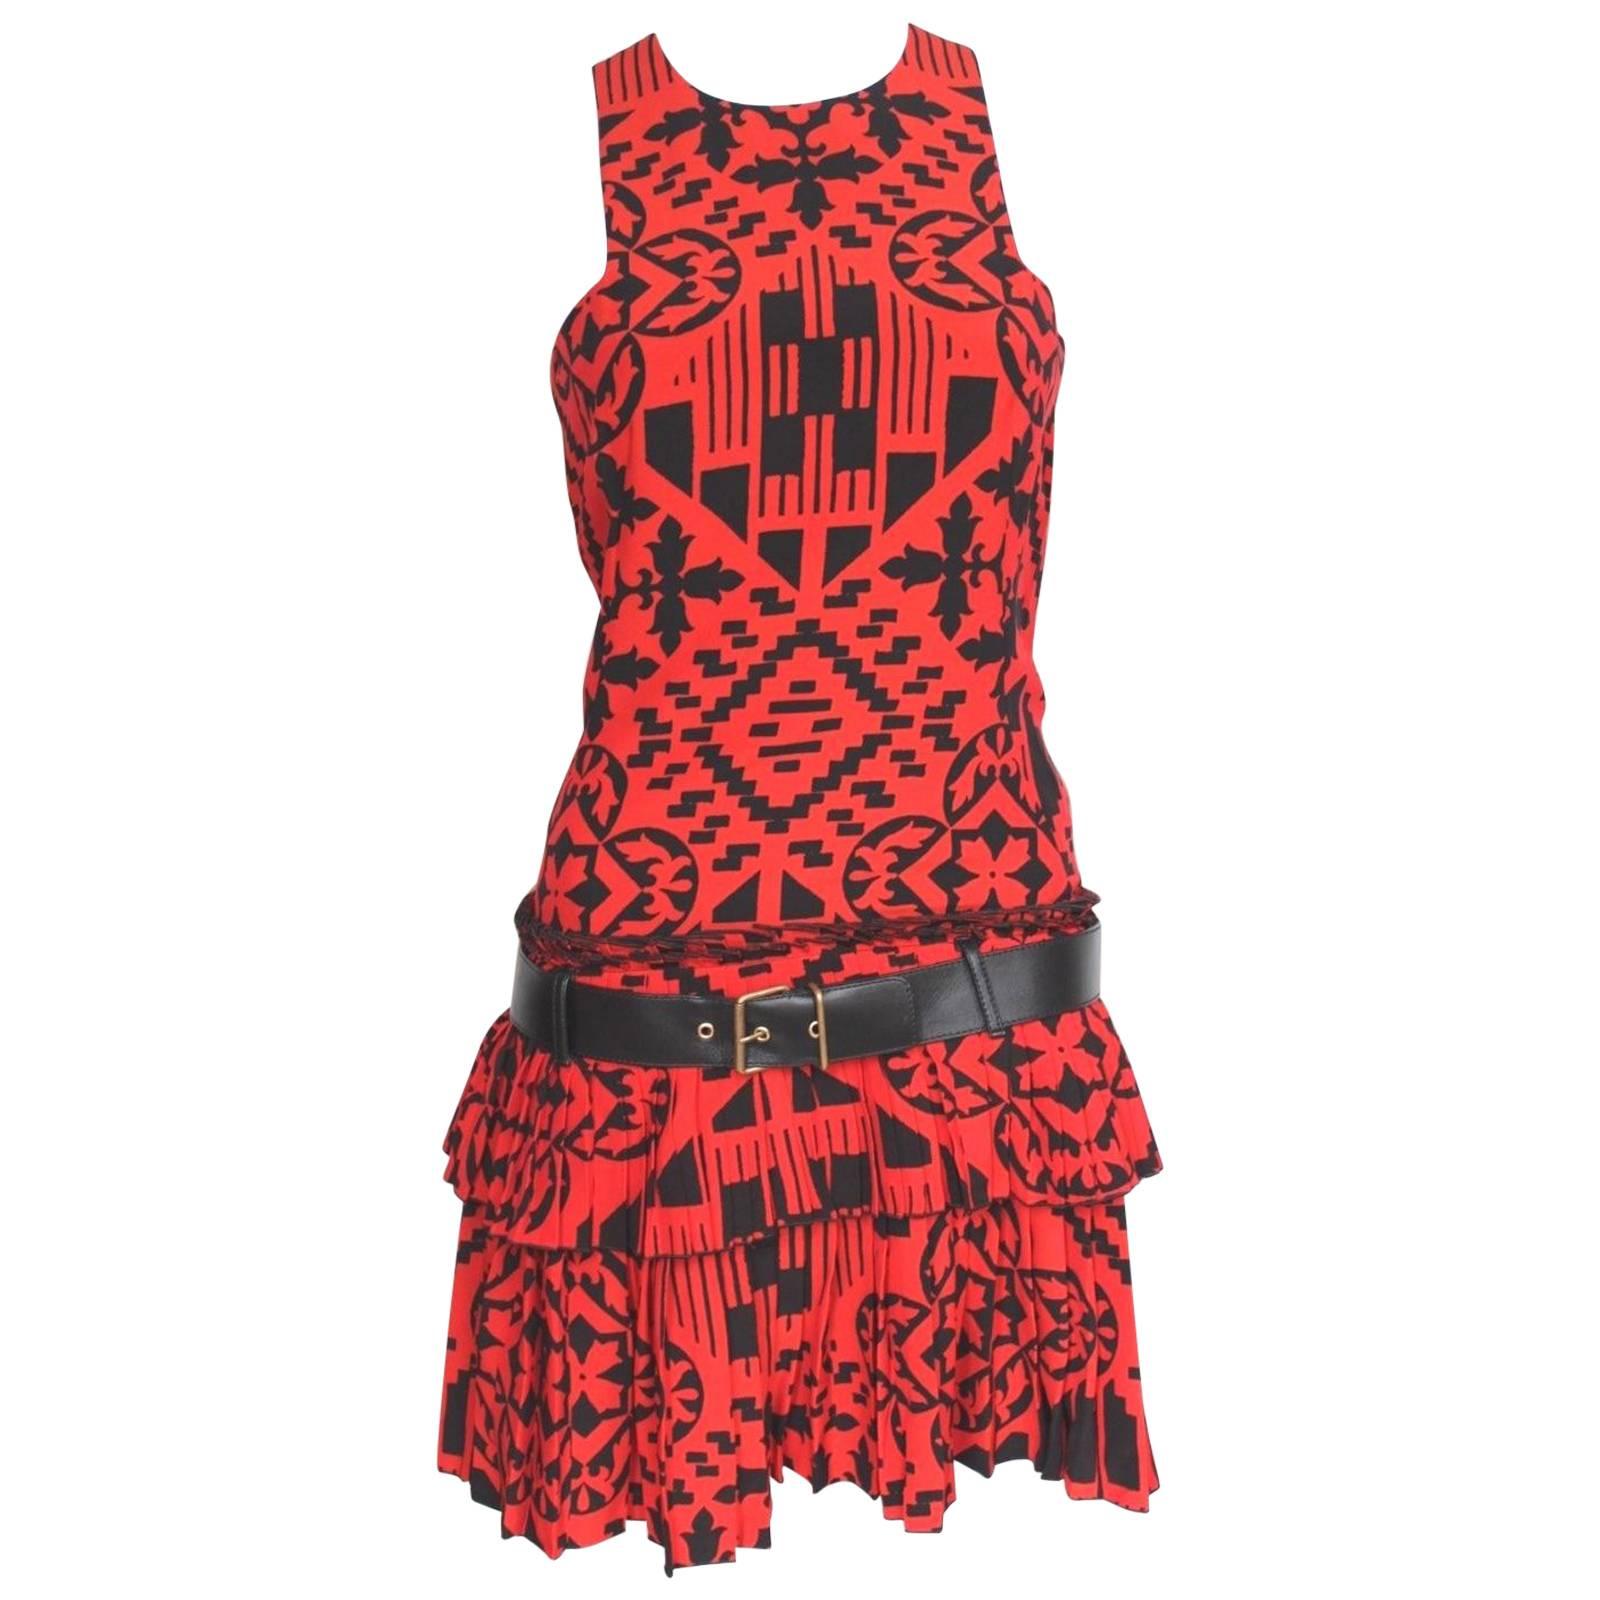 New Alexander McQueen Resort 2014 Red Print Pleated dress 38 uk 6-8  For Sale